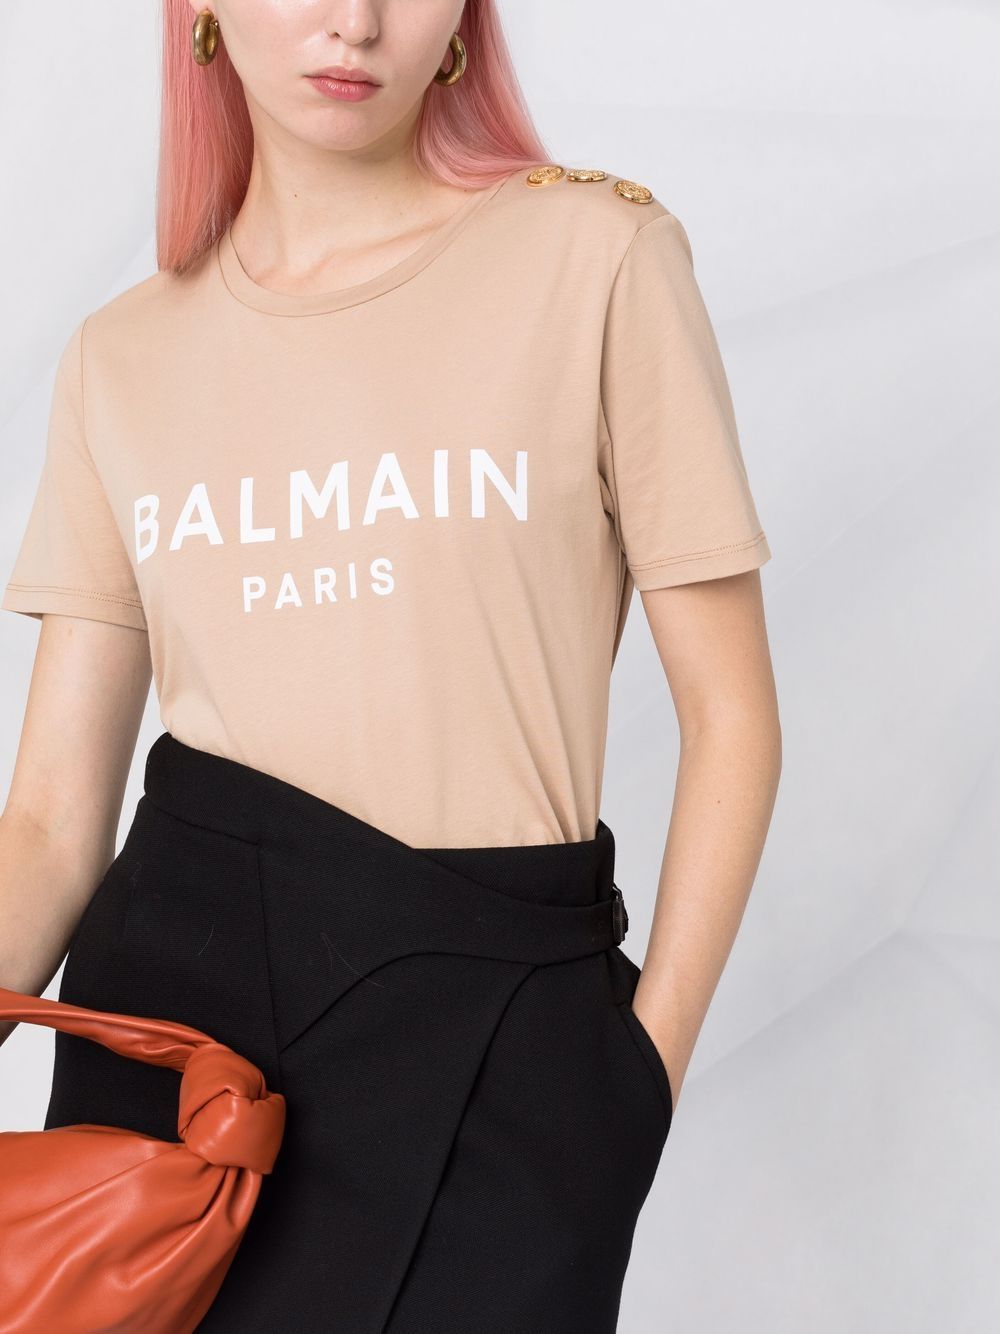 BALMAIN WOMEN SS 3 BTN Printer Balmain T-Shirt Classic Fit Sable/Blanc - MAISONDEFASHION.COM